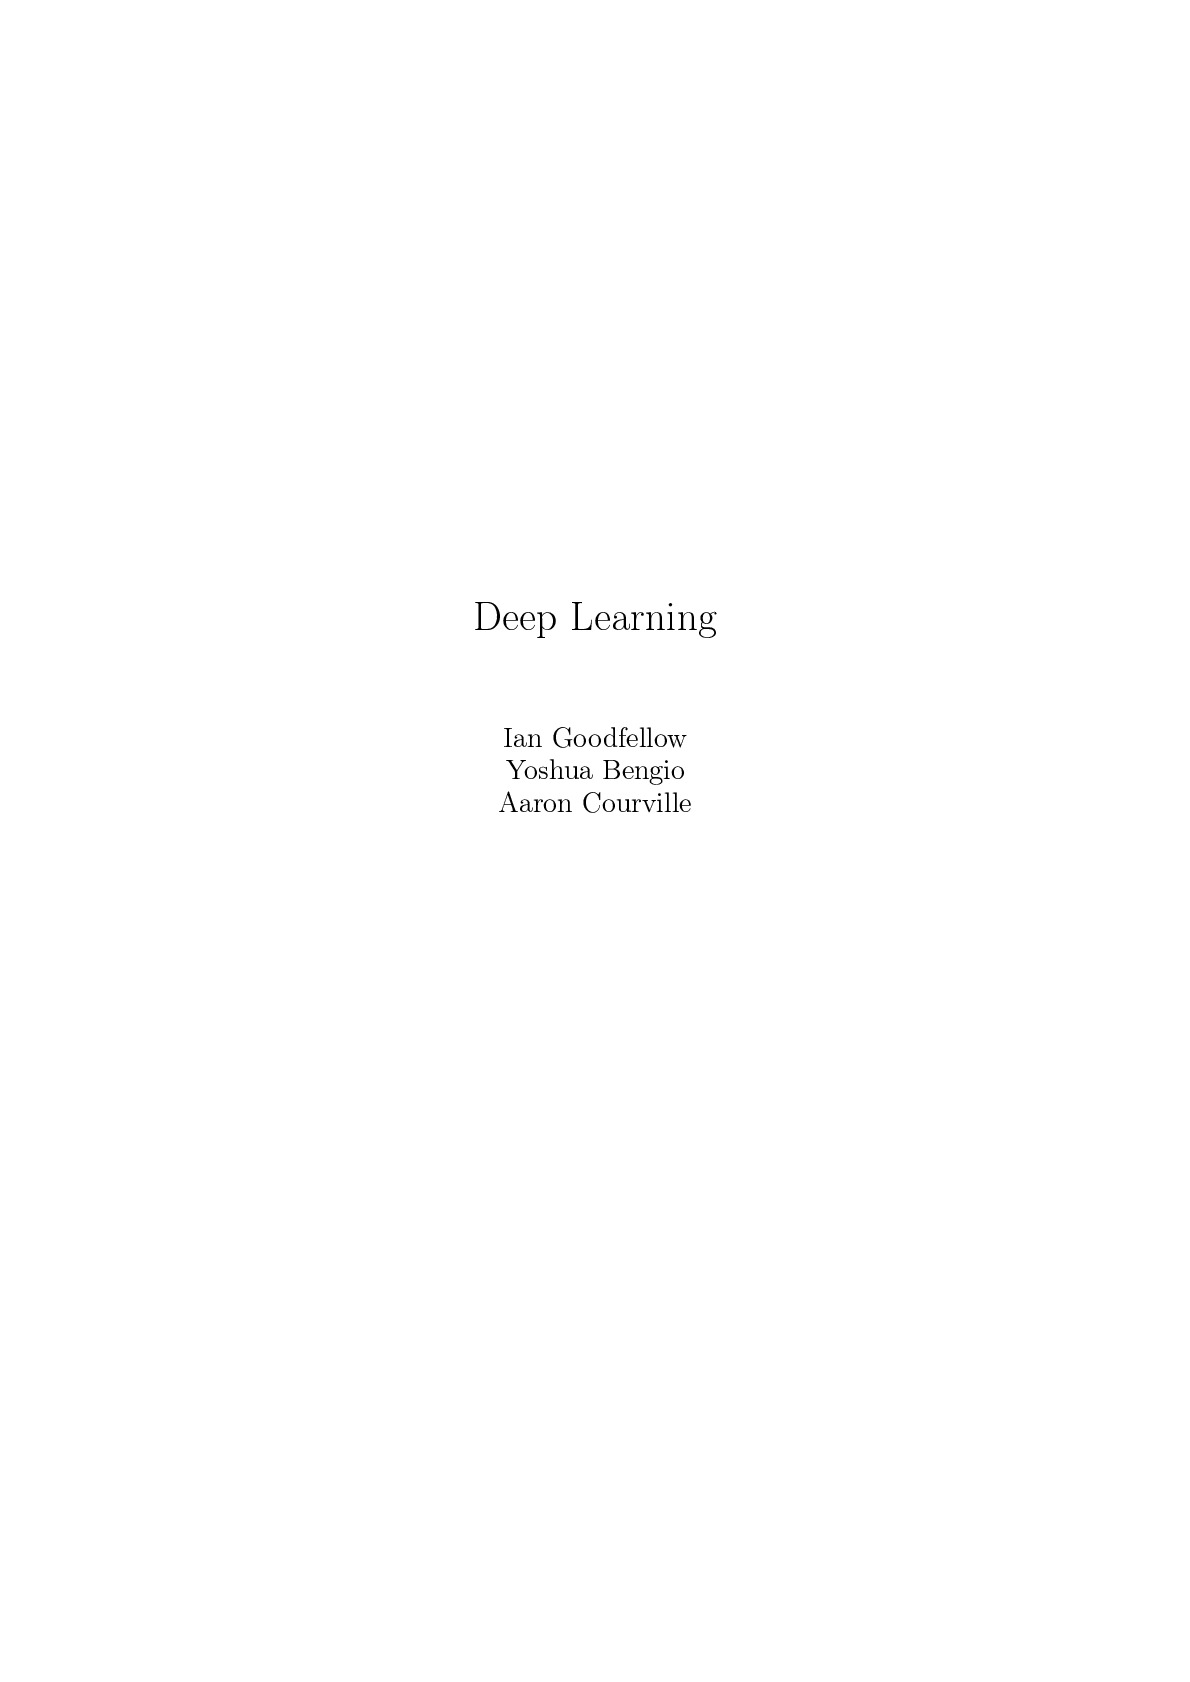 Ian Goodfellow, Yoshua Bengio, Aaron Courville – Deep Learning (2017, MIT)